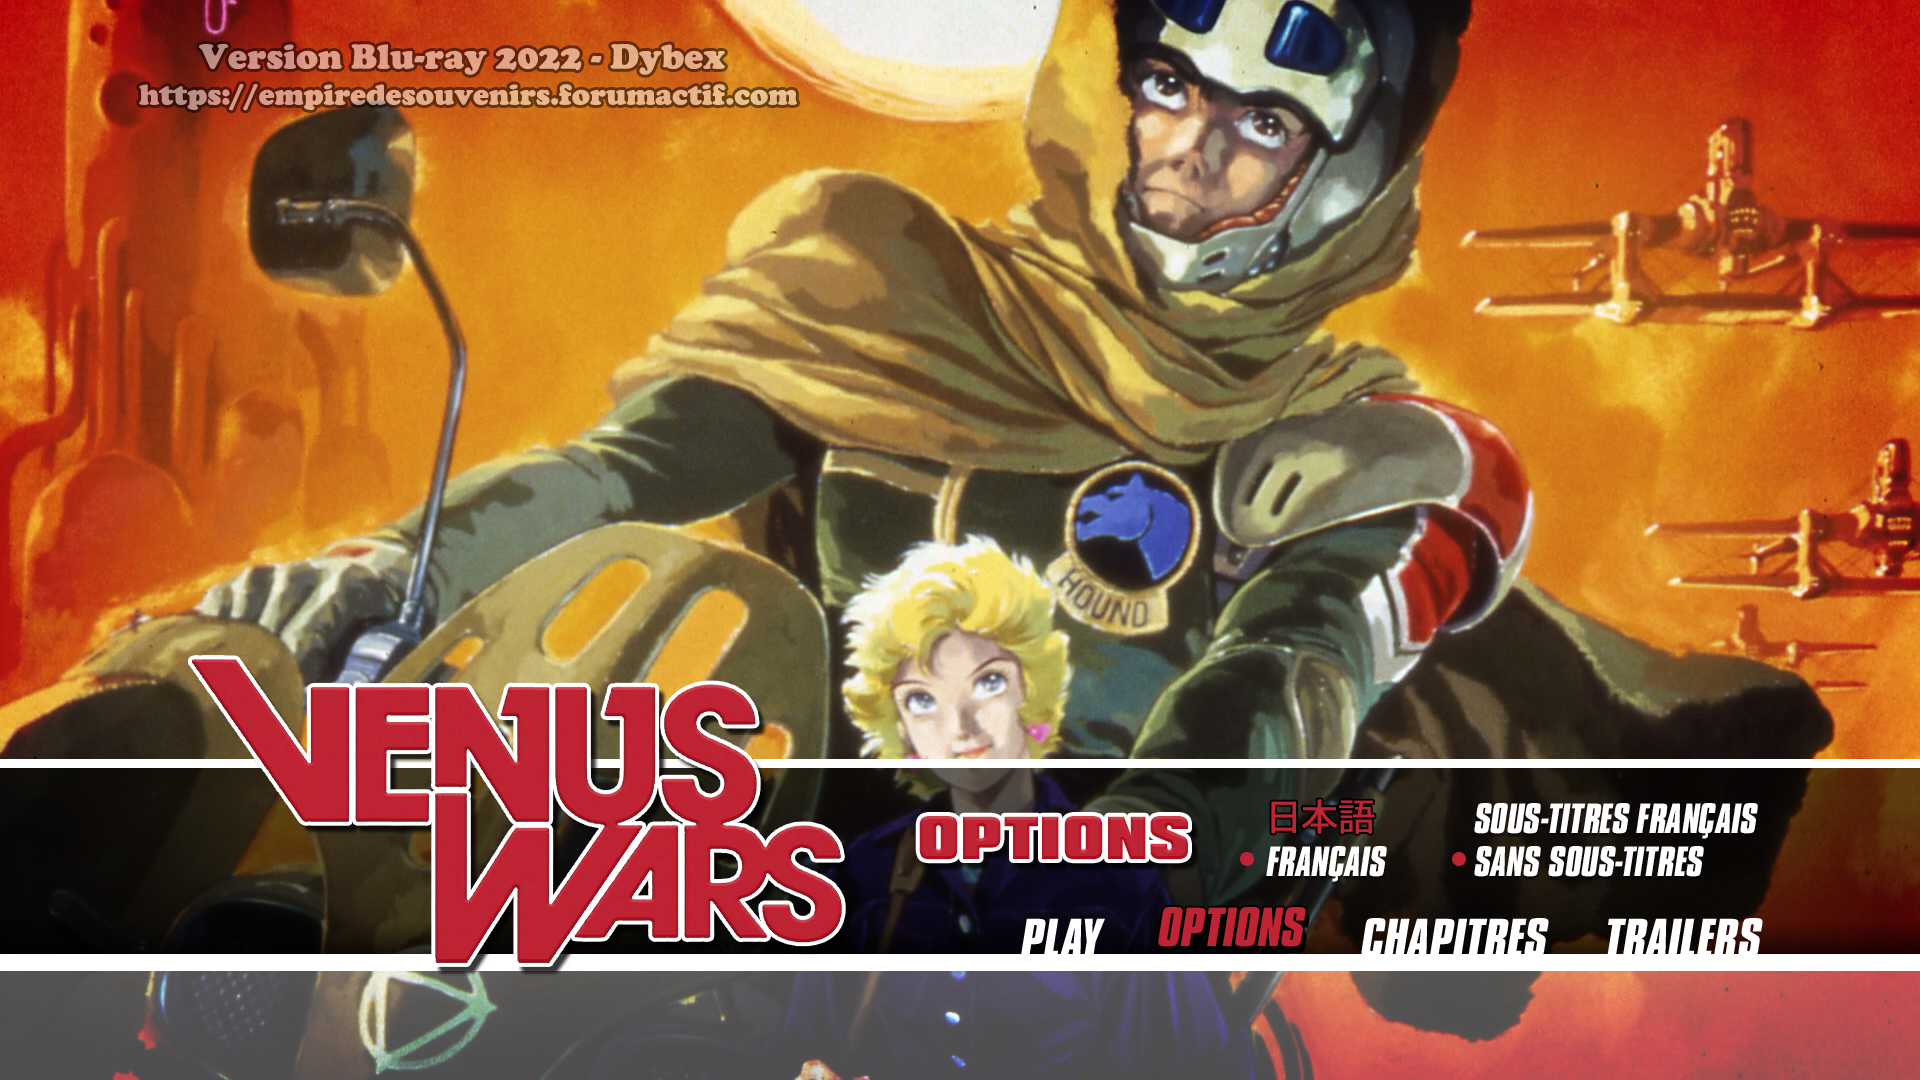 Review Blu-ray - Venus Wars - Dybex 6i5k